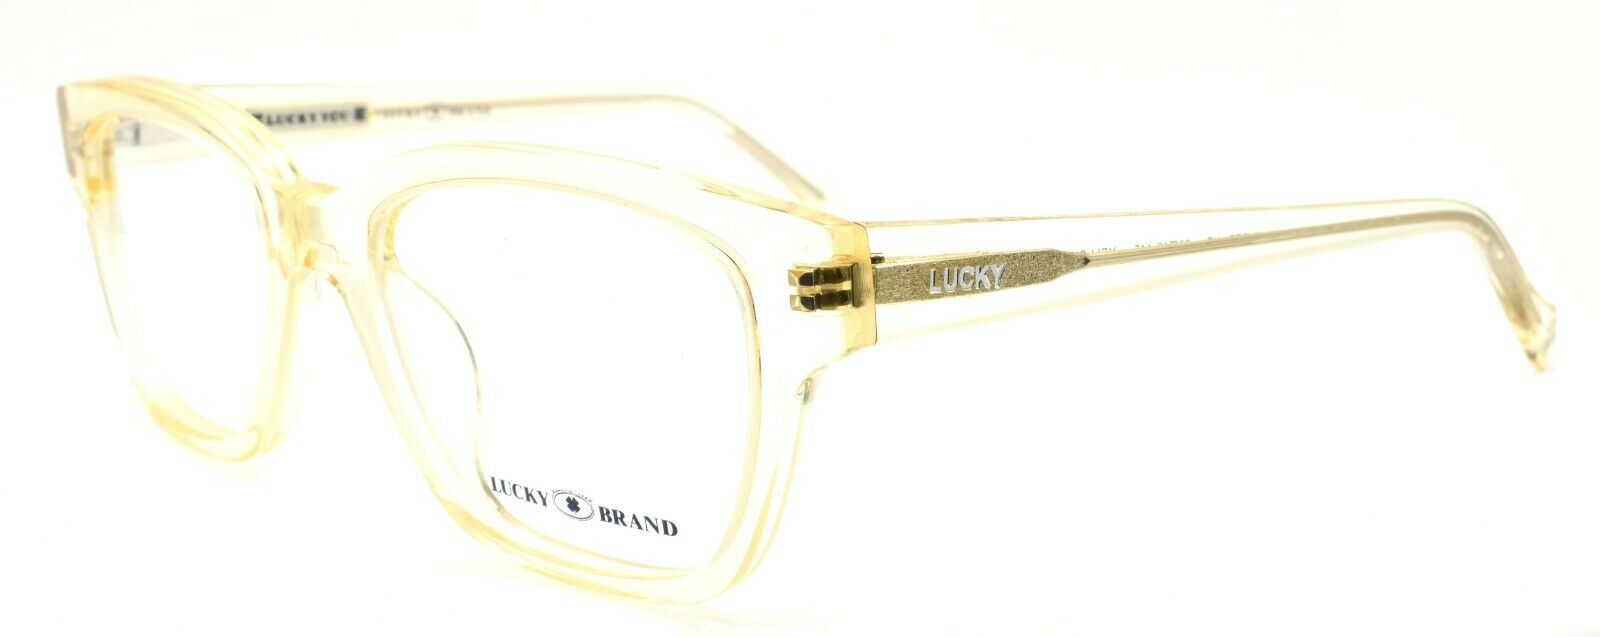 1-LUCKY BRAND Venturer UF Men's Eyeglasses Frames 50-19-145 Yellow Crystal + CASE-751286249316-IKSpecs